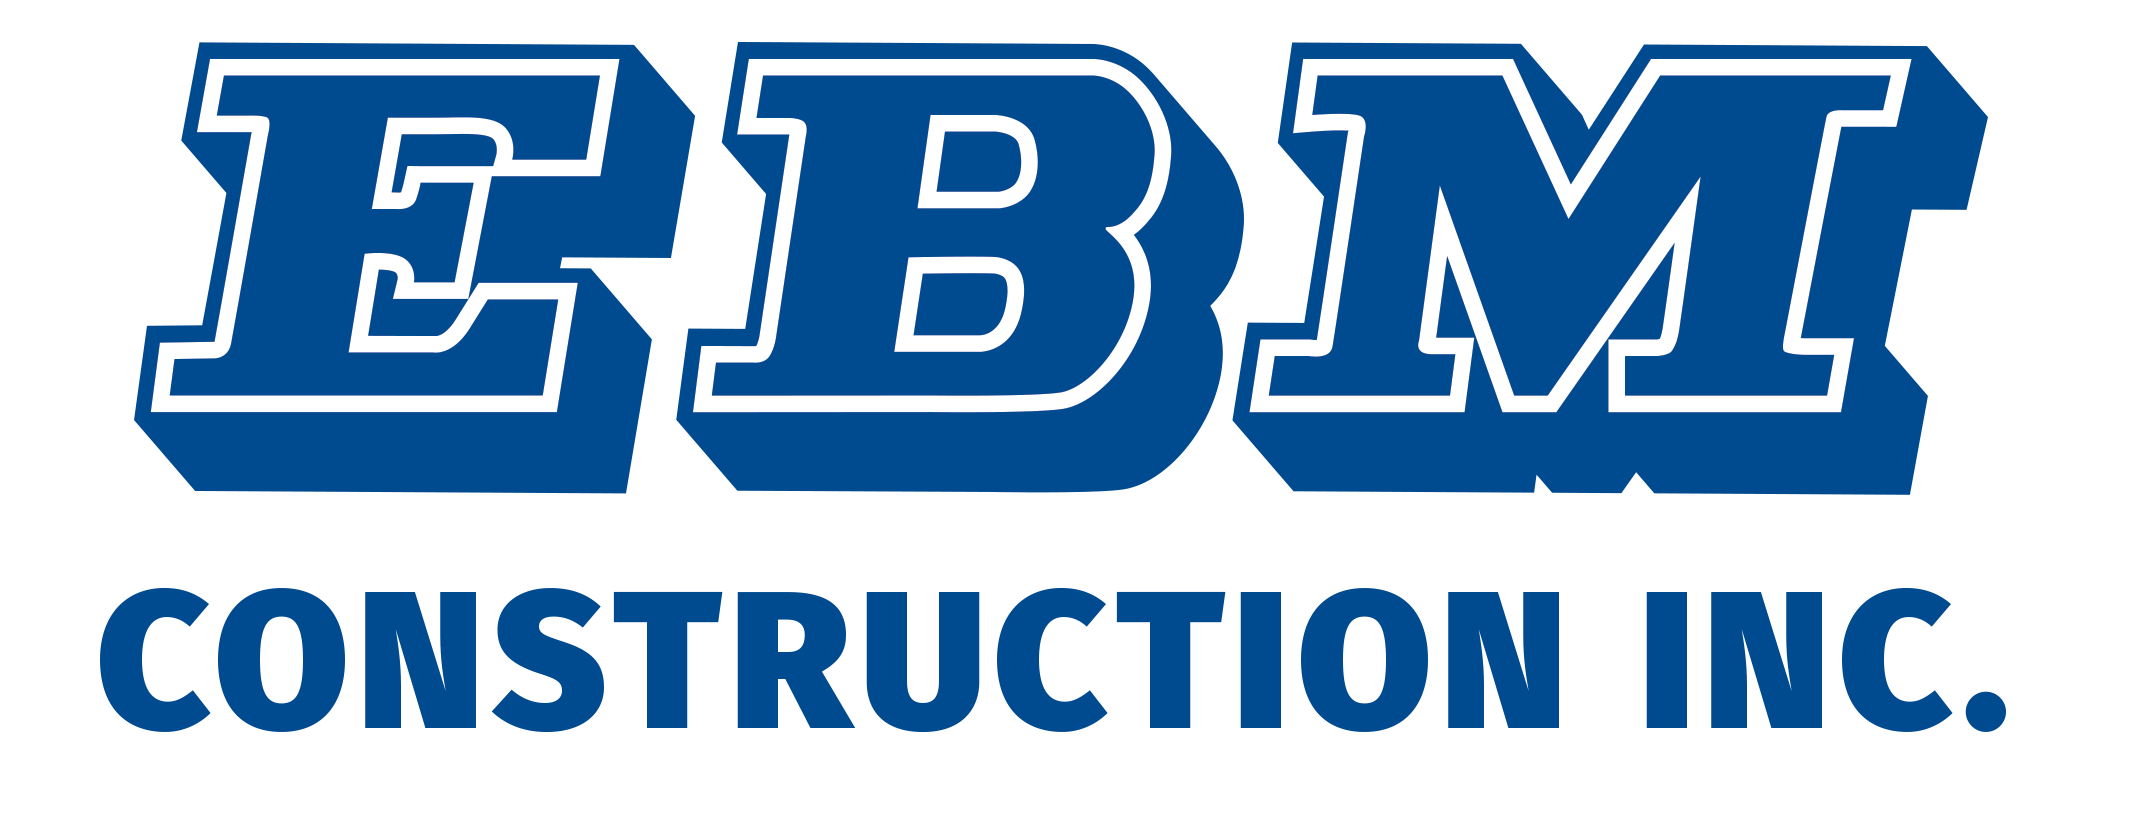 ebm construction